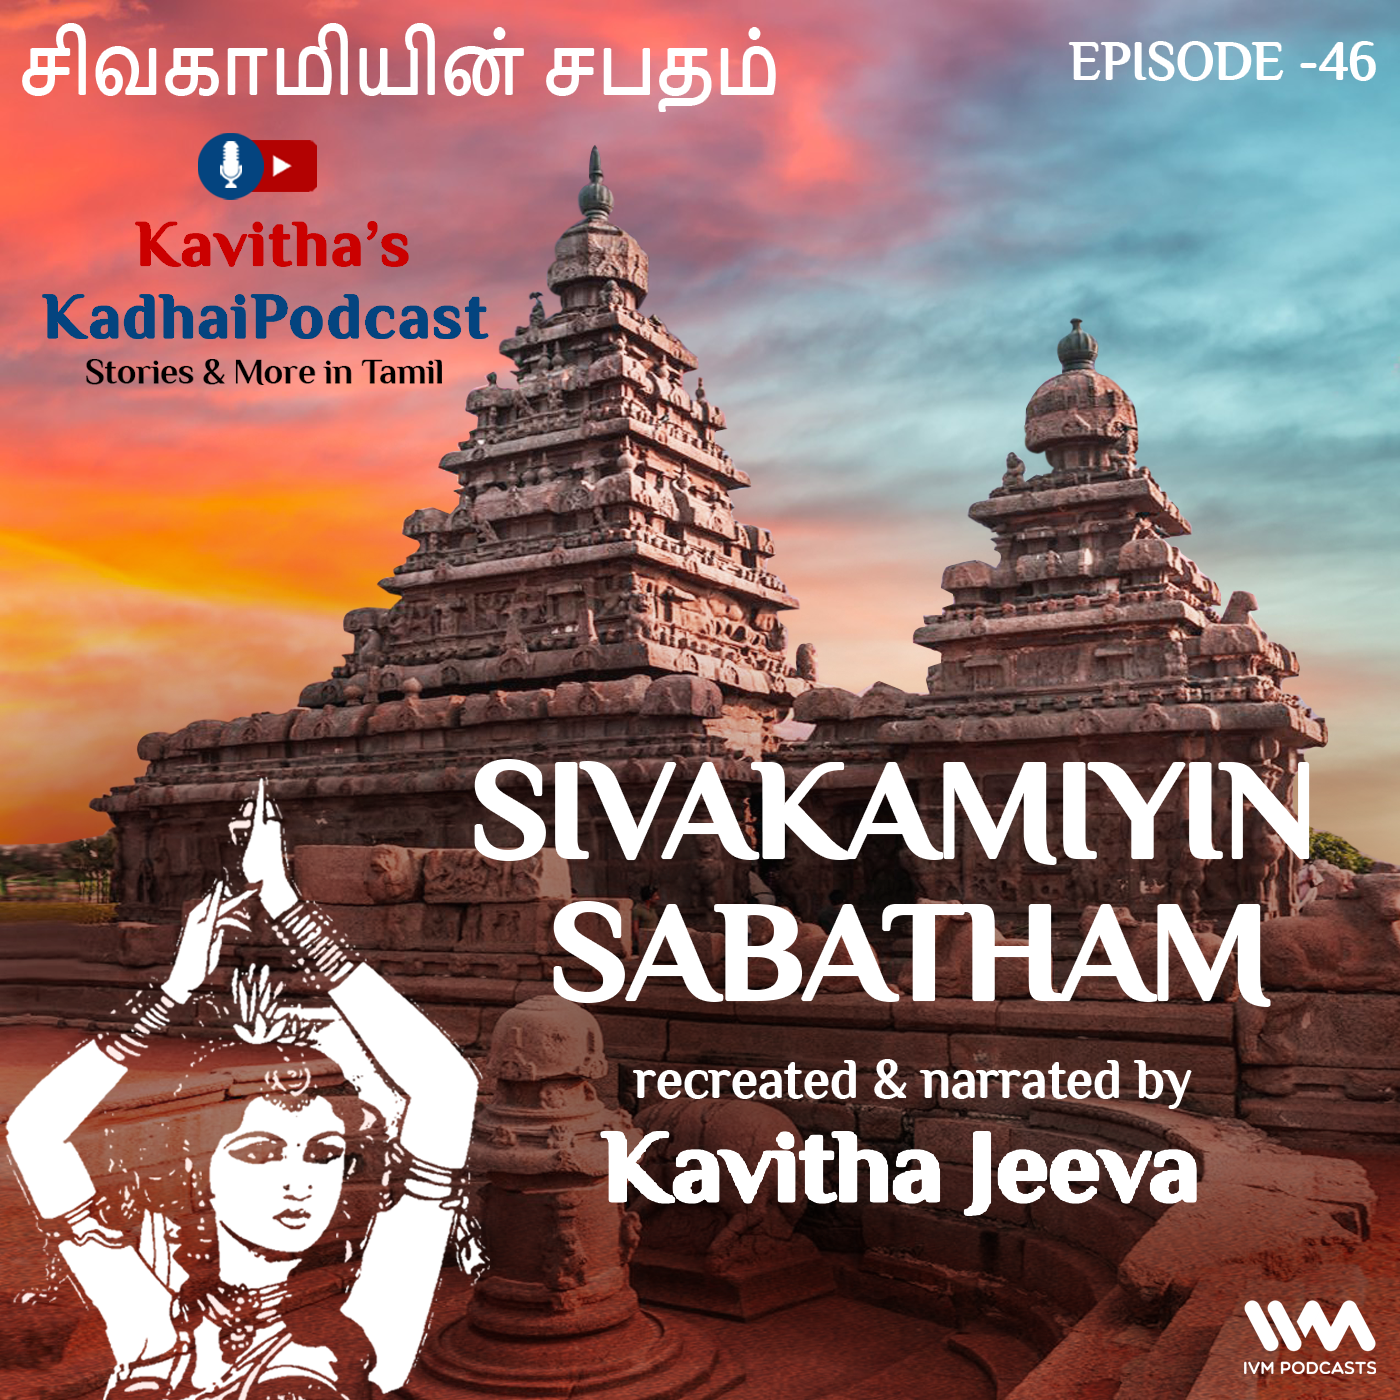 KadhaiPodcast's Sivakamiyin Sabatham - Episode # 46